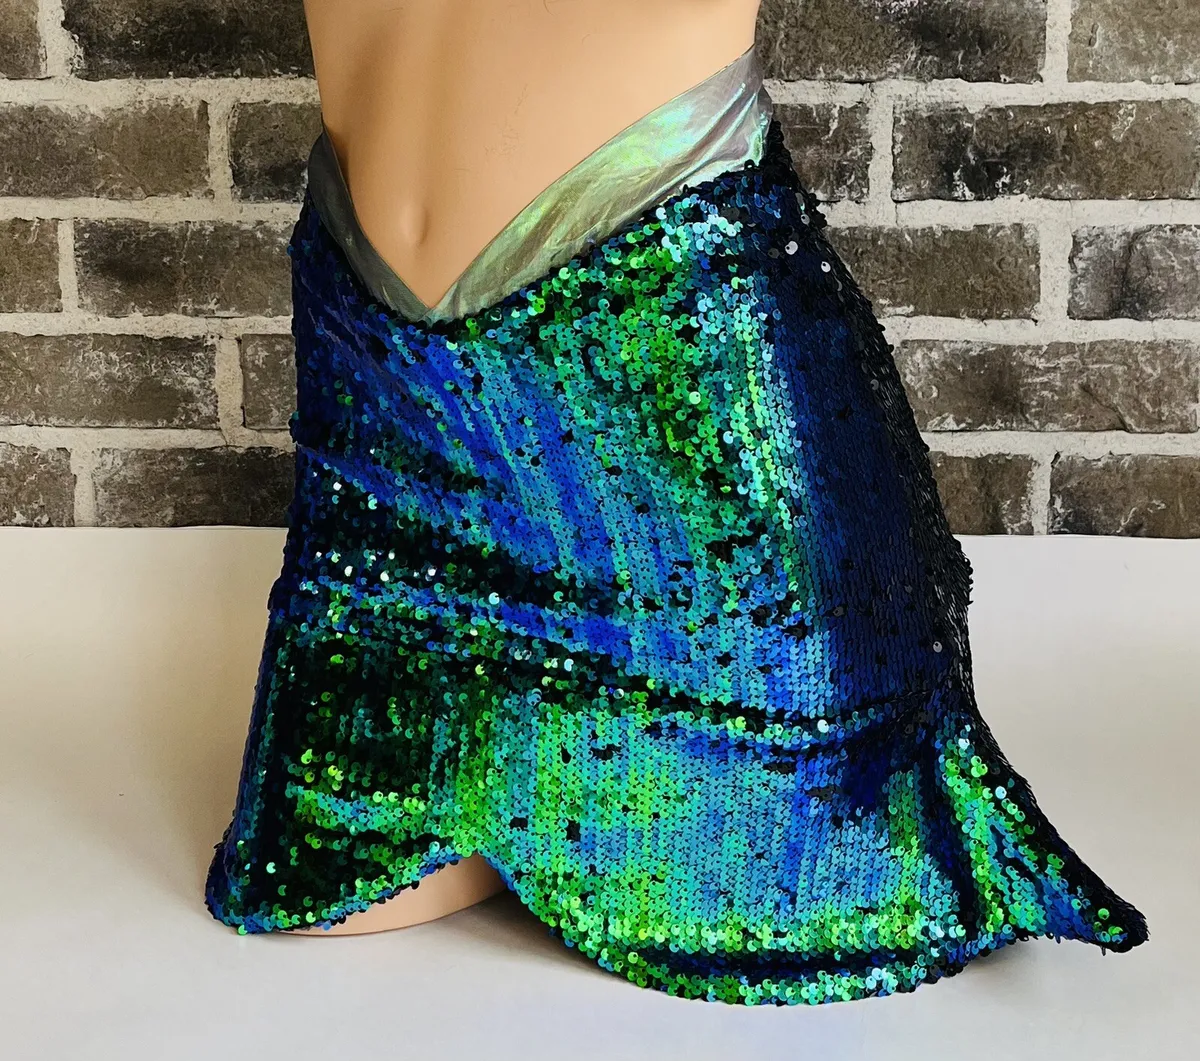 aryono darmawan recommends mermaid short skirt costume pic